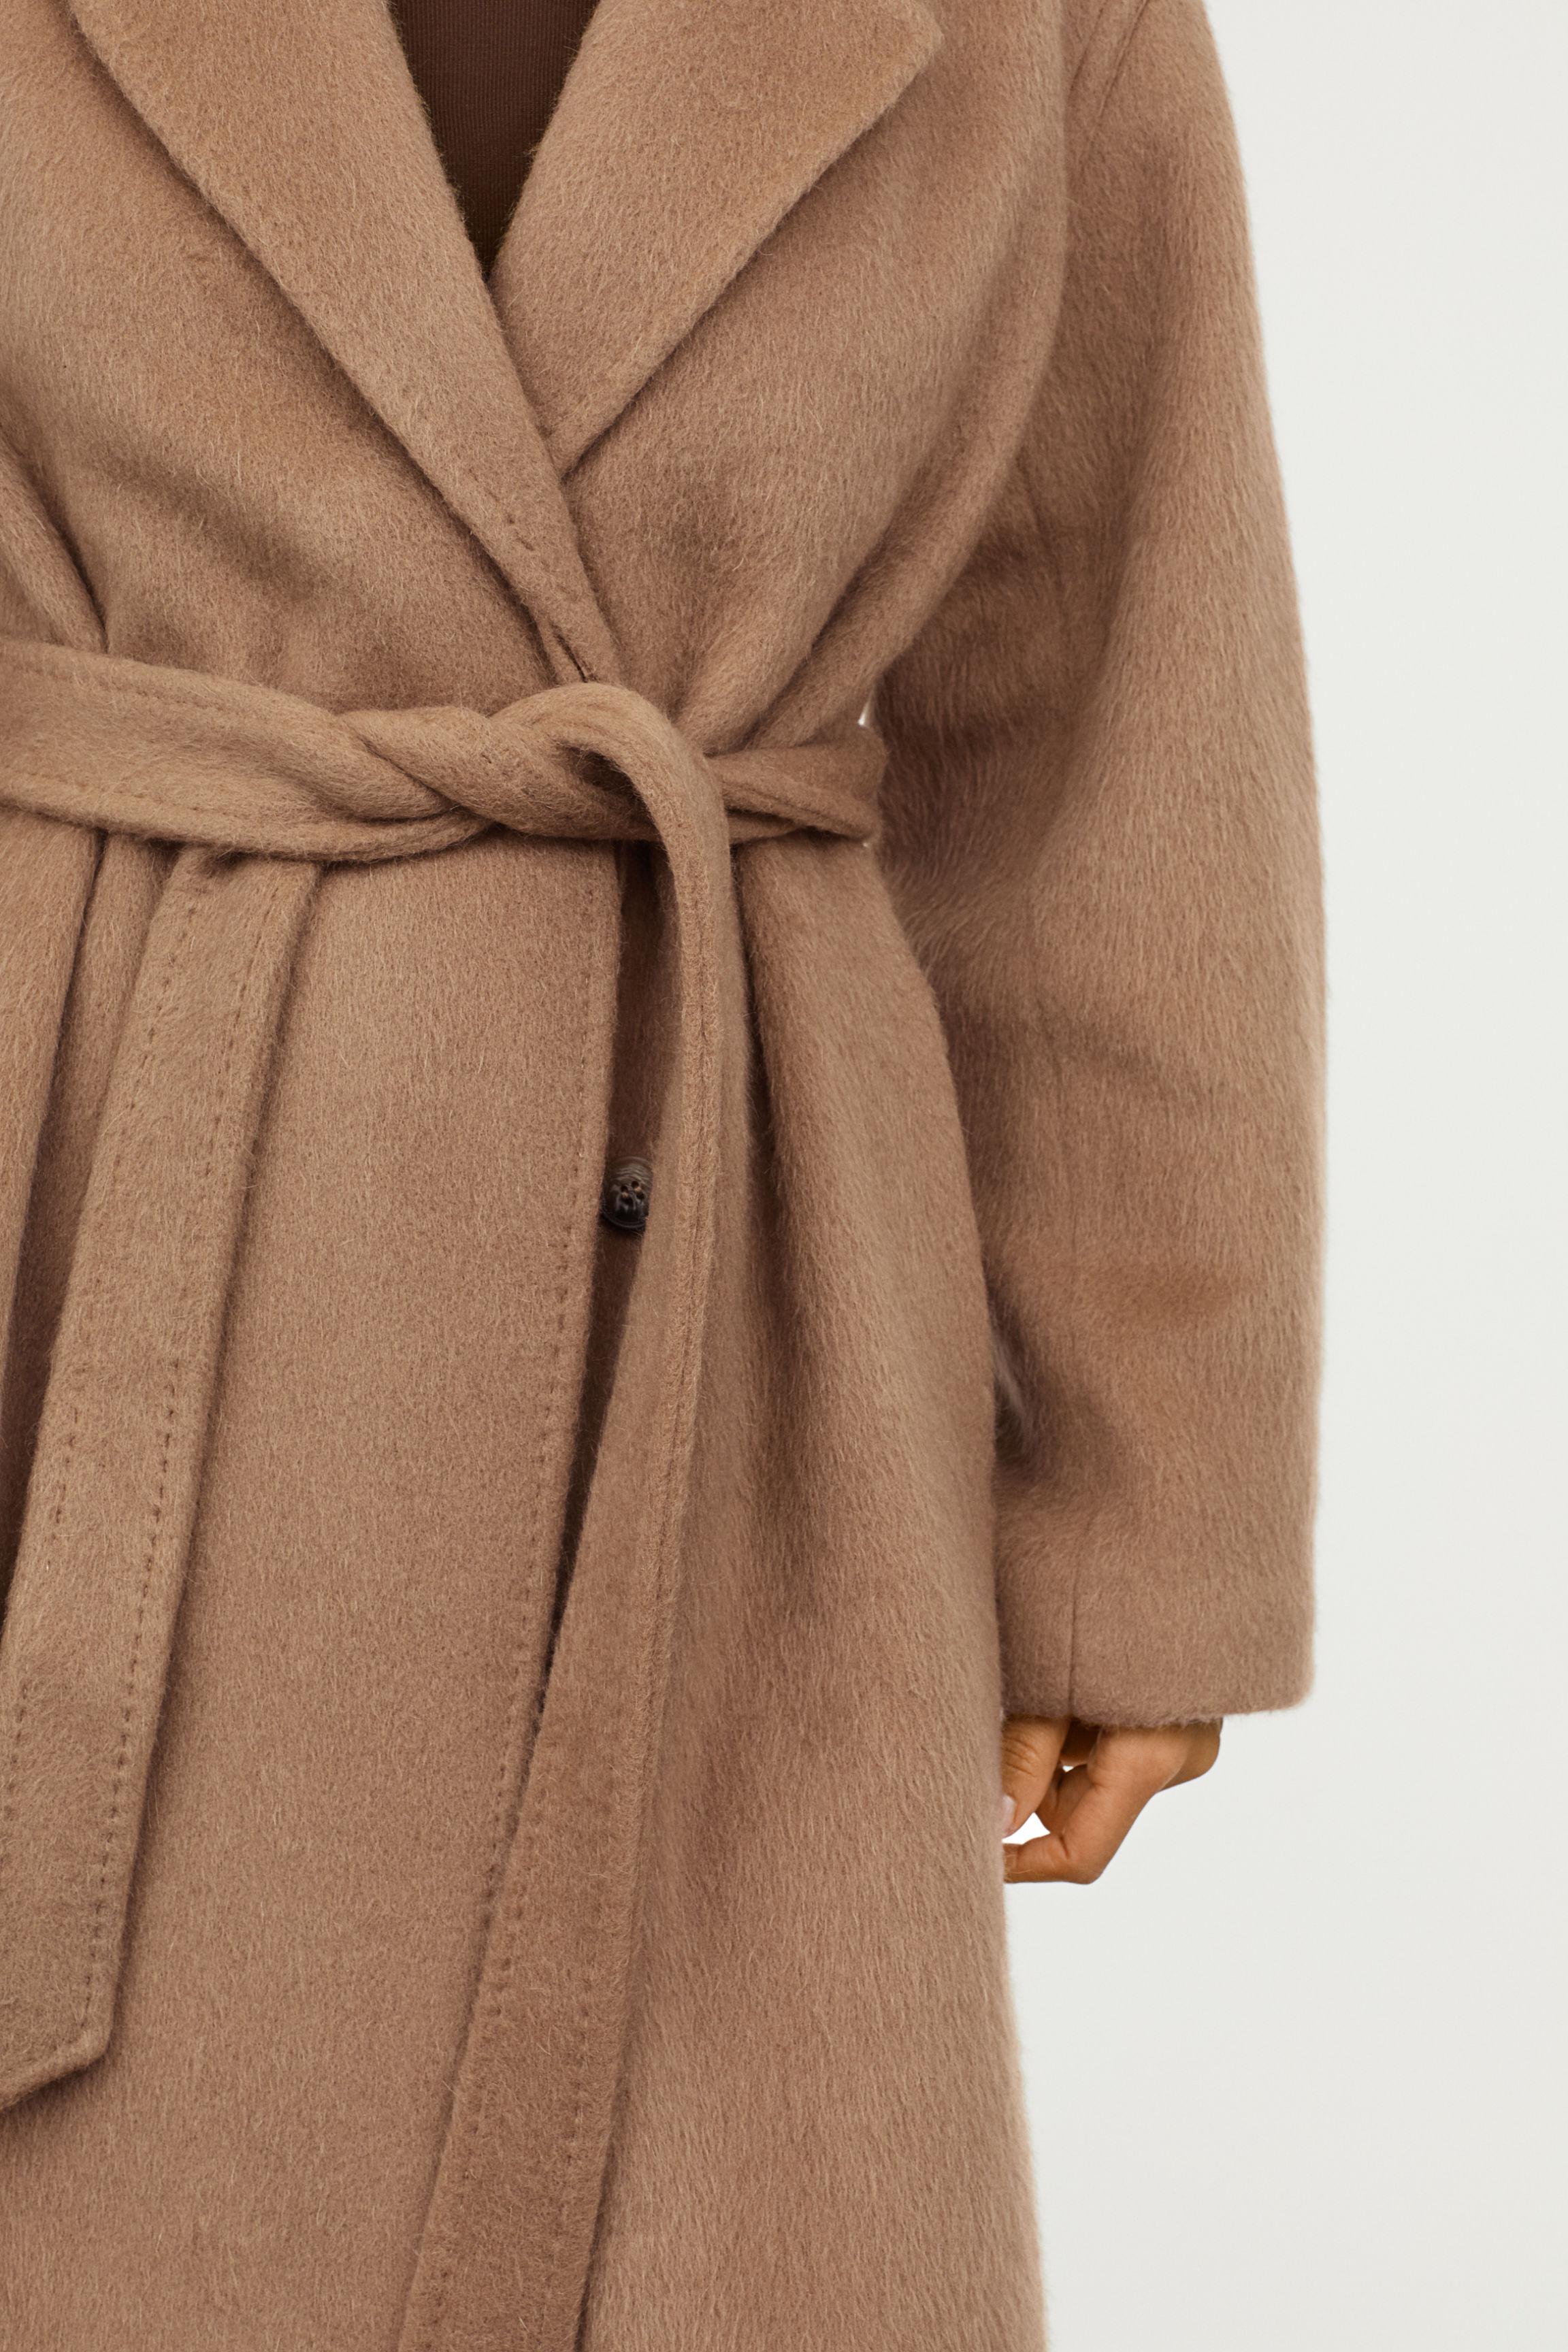 H&M Long Wool-blend Coat in Natural | Lyst